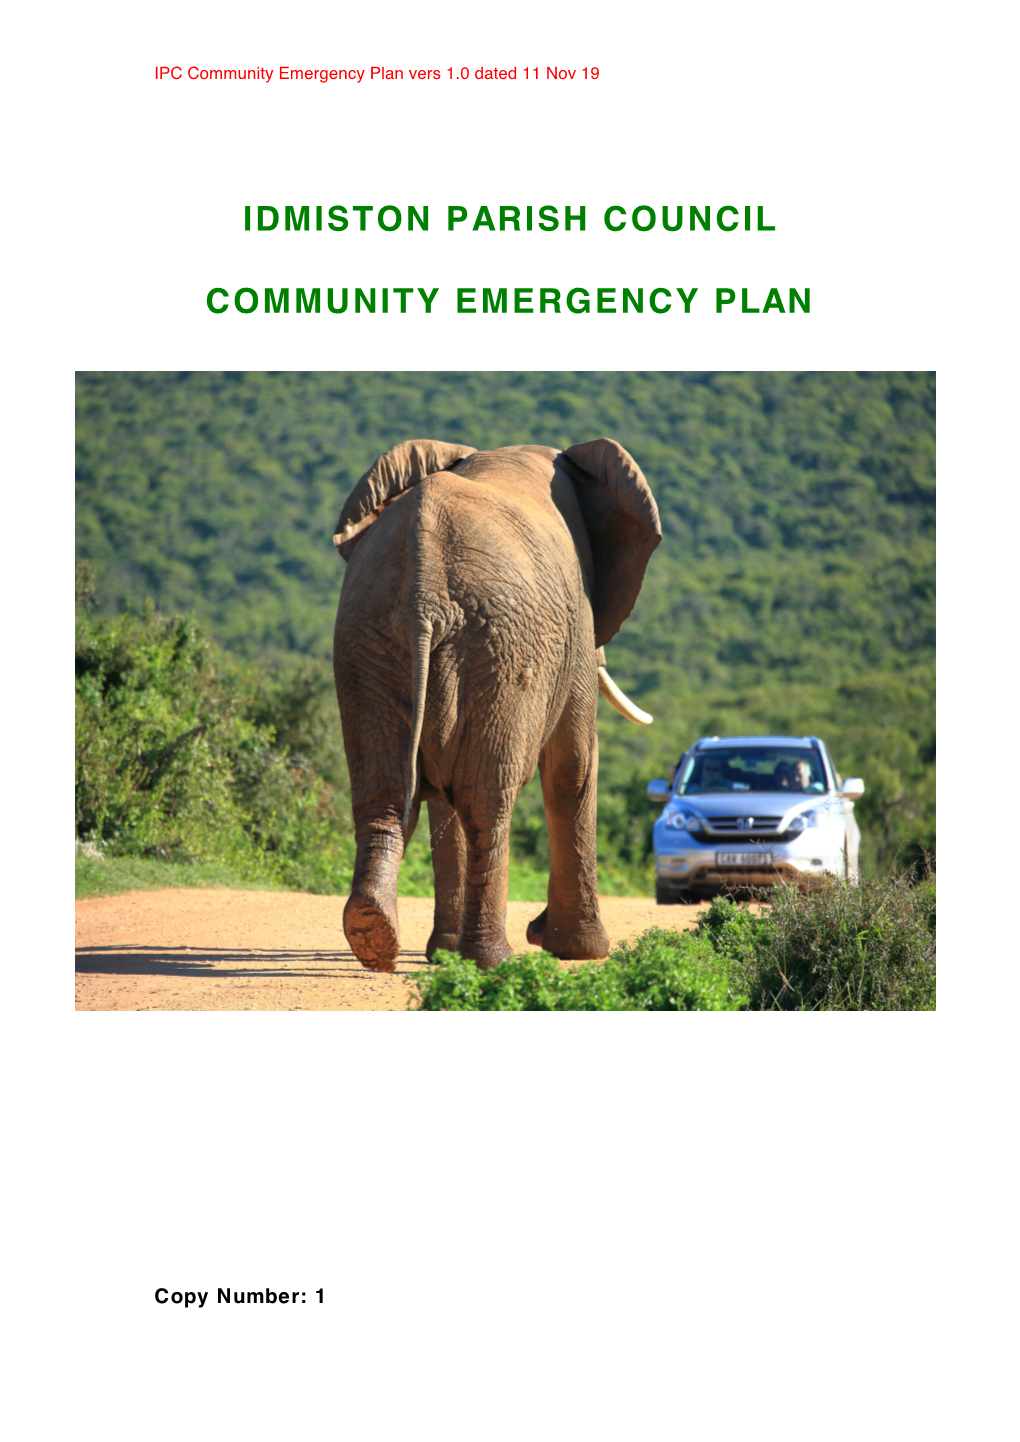 IPC Community Emergency Plan Vers 1.0 Da[...]